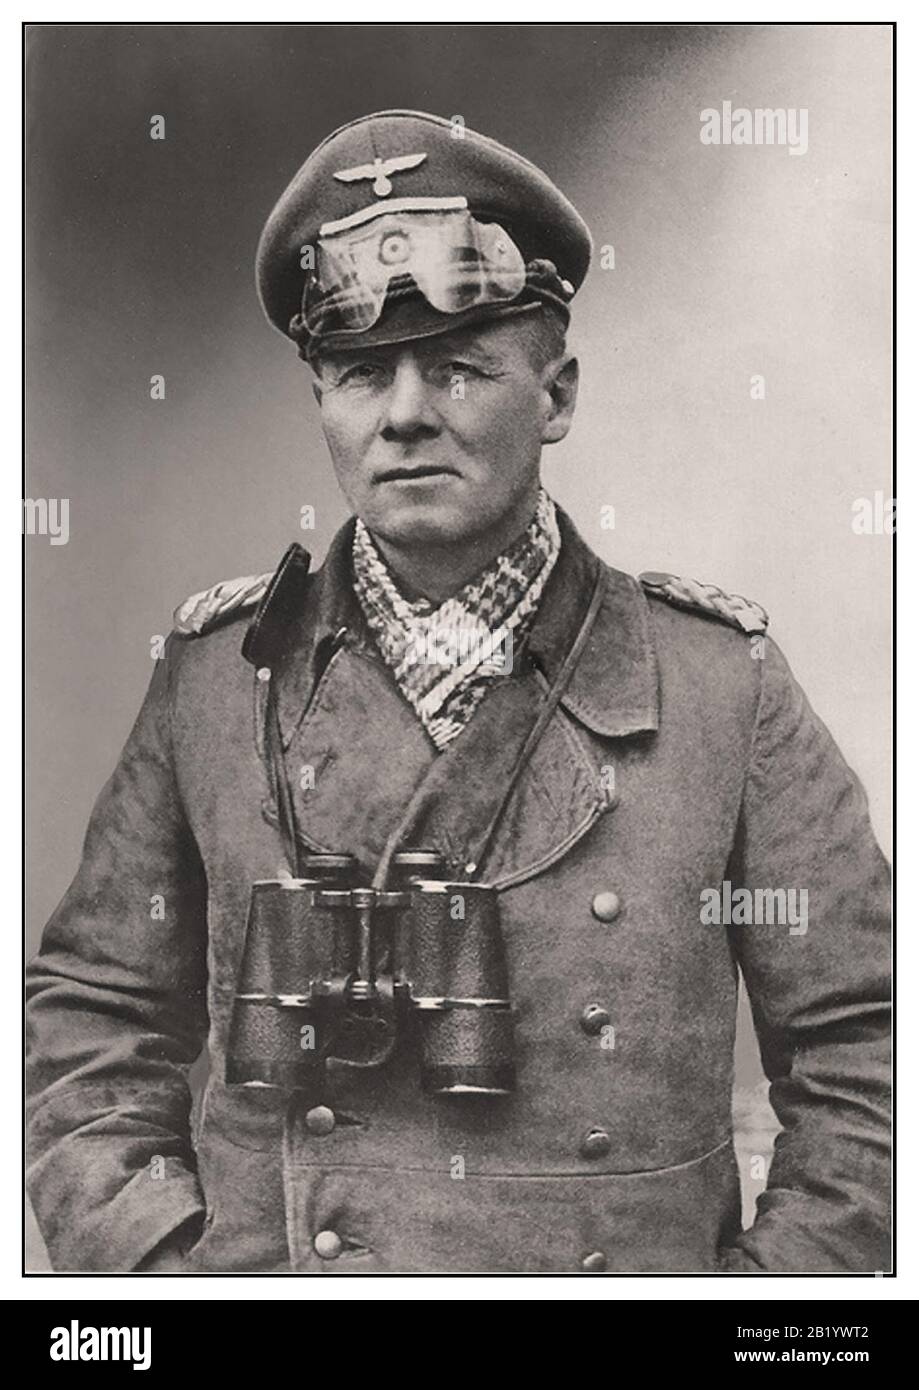 Erwin Rommel Fotos E Im Genes De Stock P Gina Alamy